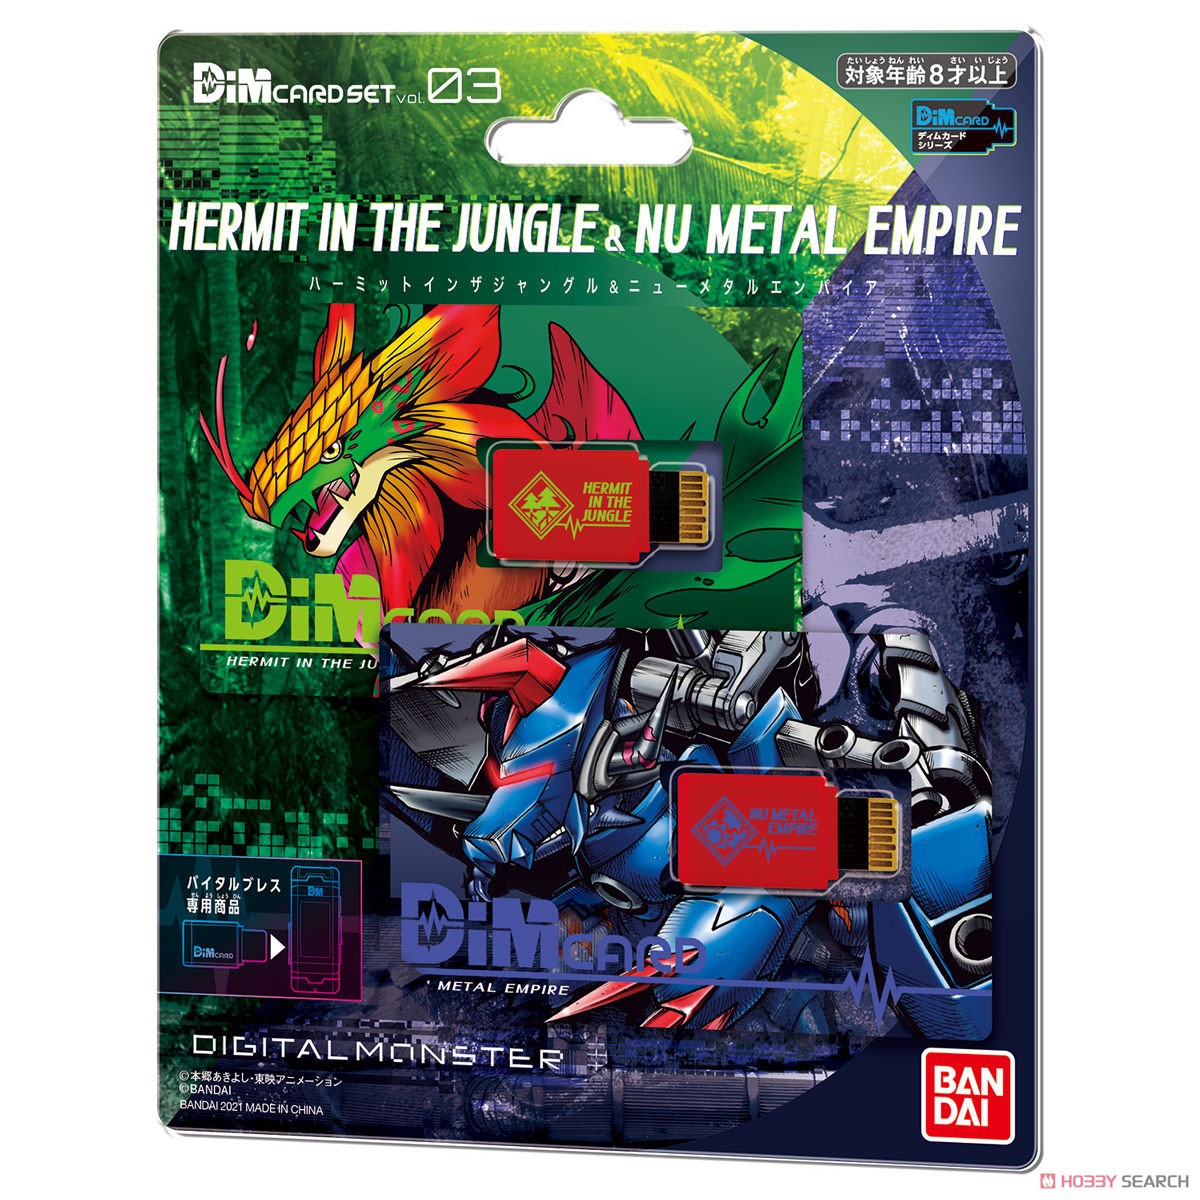 Dimカードセット Vol3 HERMIT IN THE JUNGLE & NU METAL EMPIRE (キャラクタートイ) パッケージ1